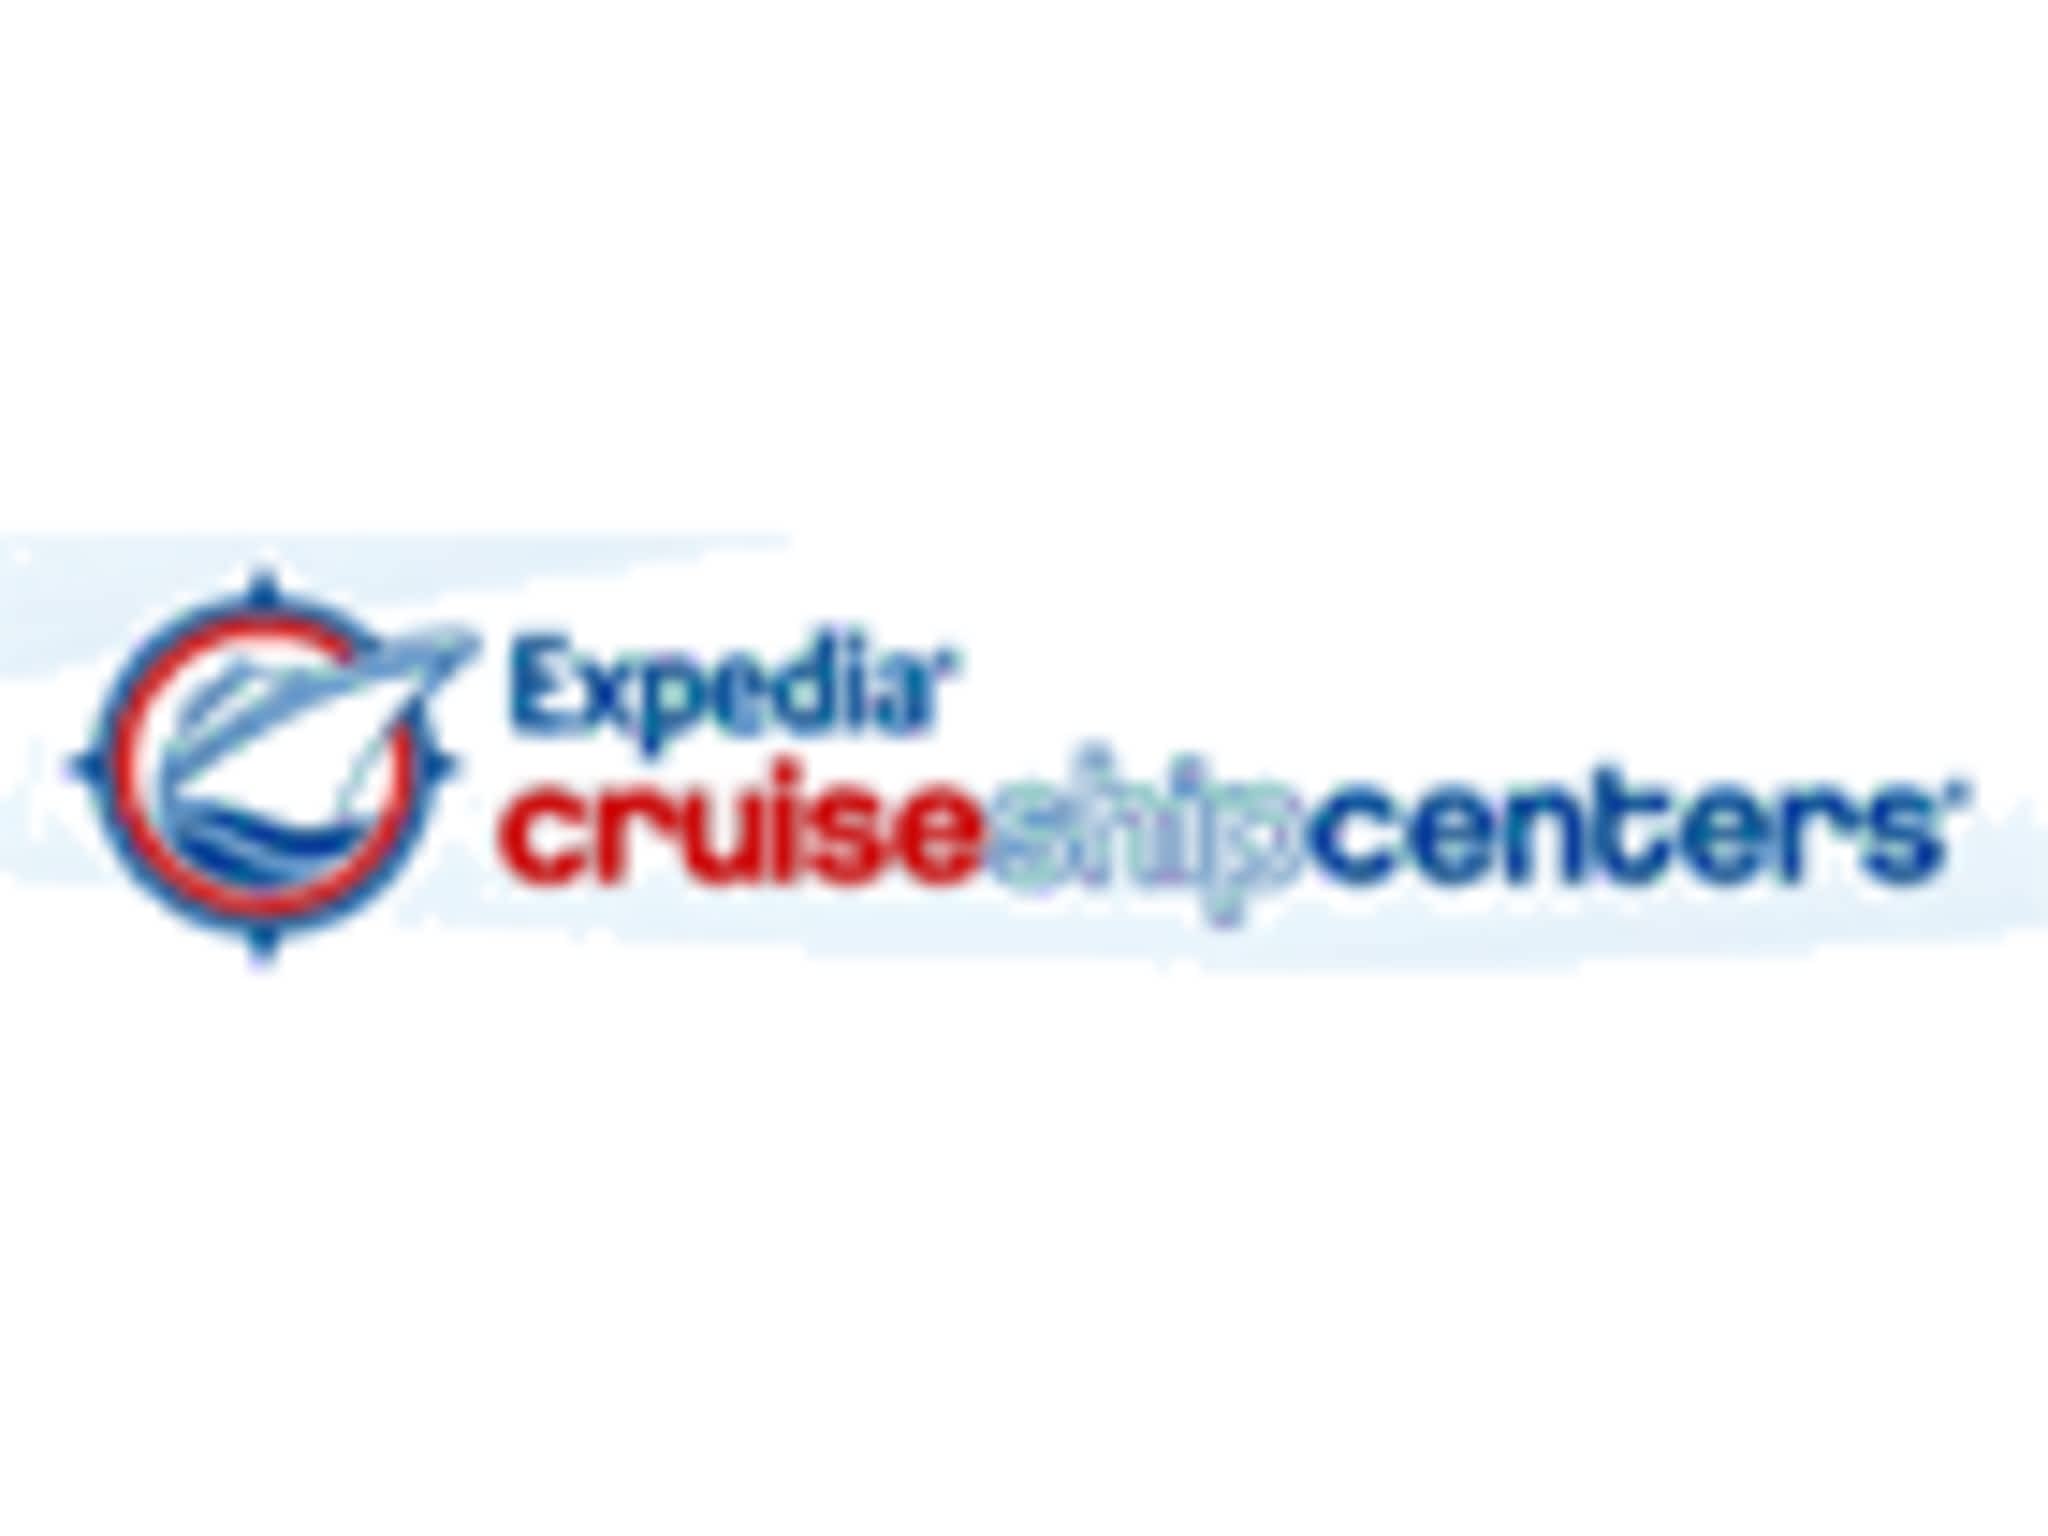 photo Expedia Cruiseshipcenters Kingsway